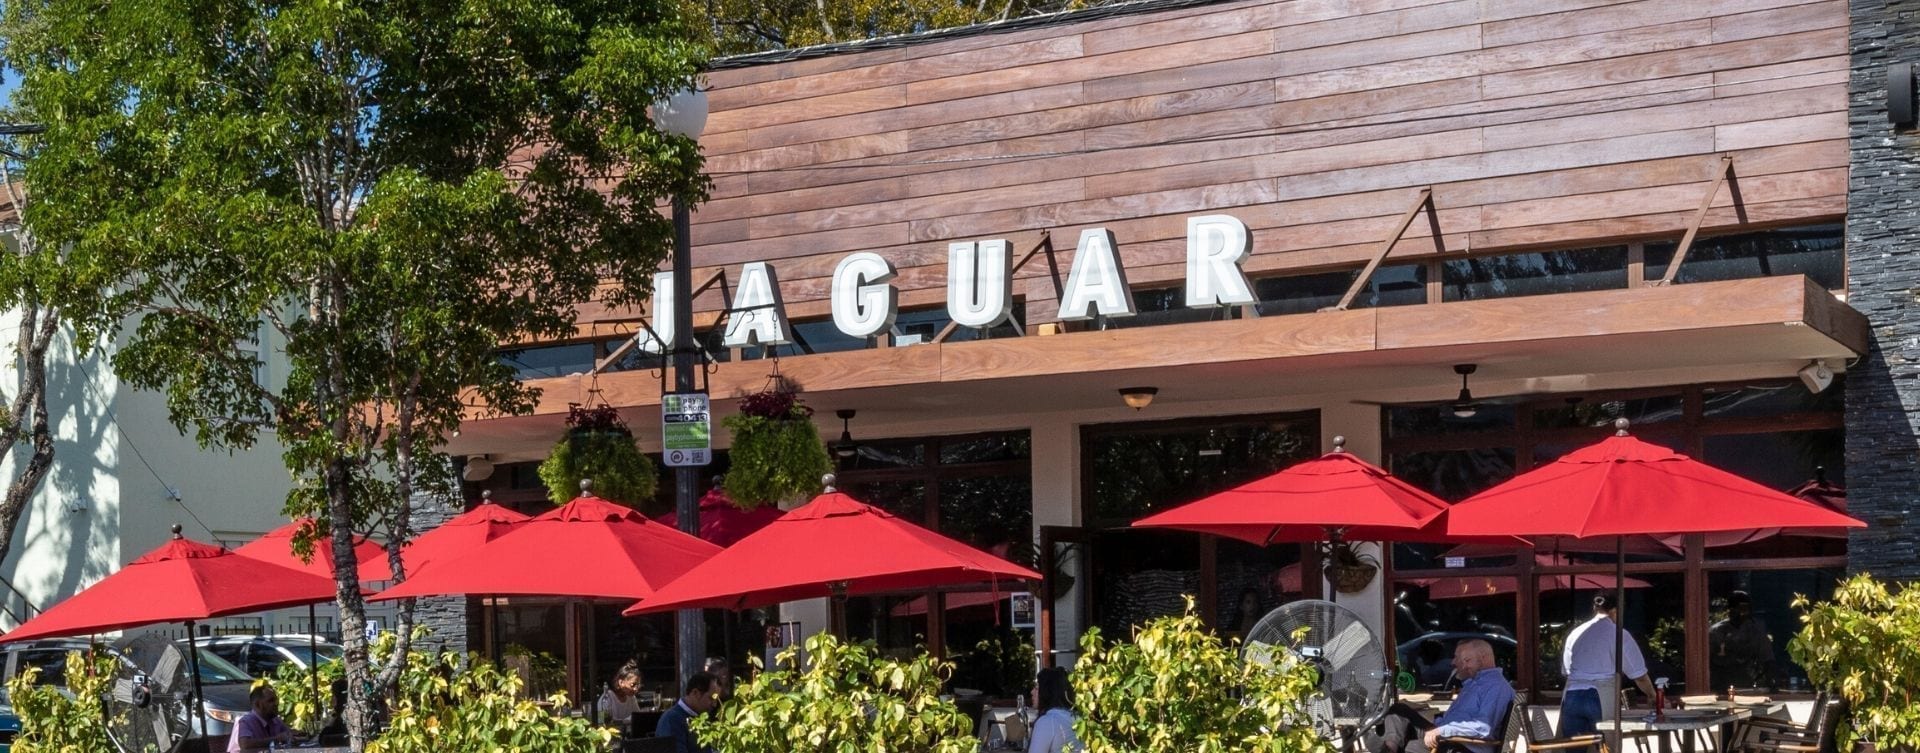 Jaguar Restaurant Coconut Grove